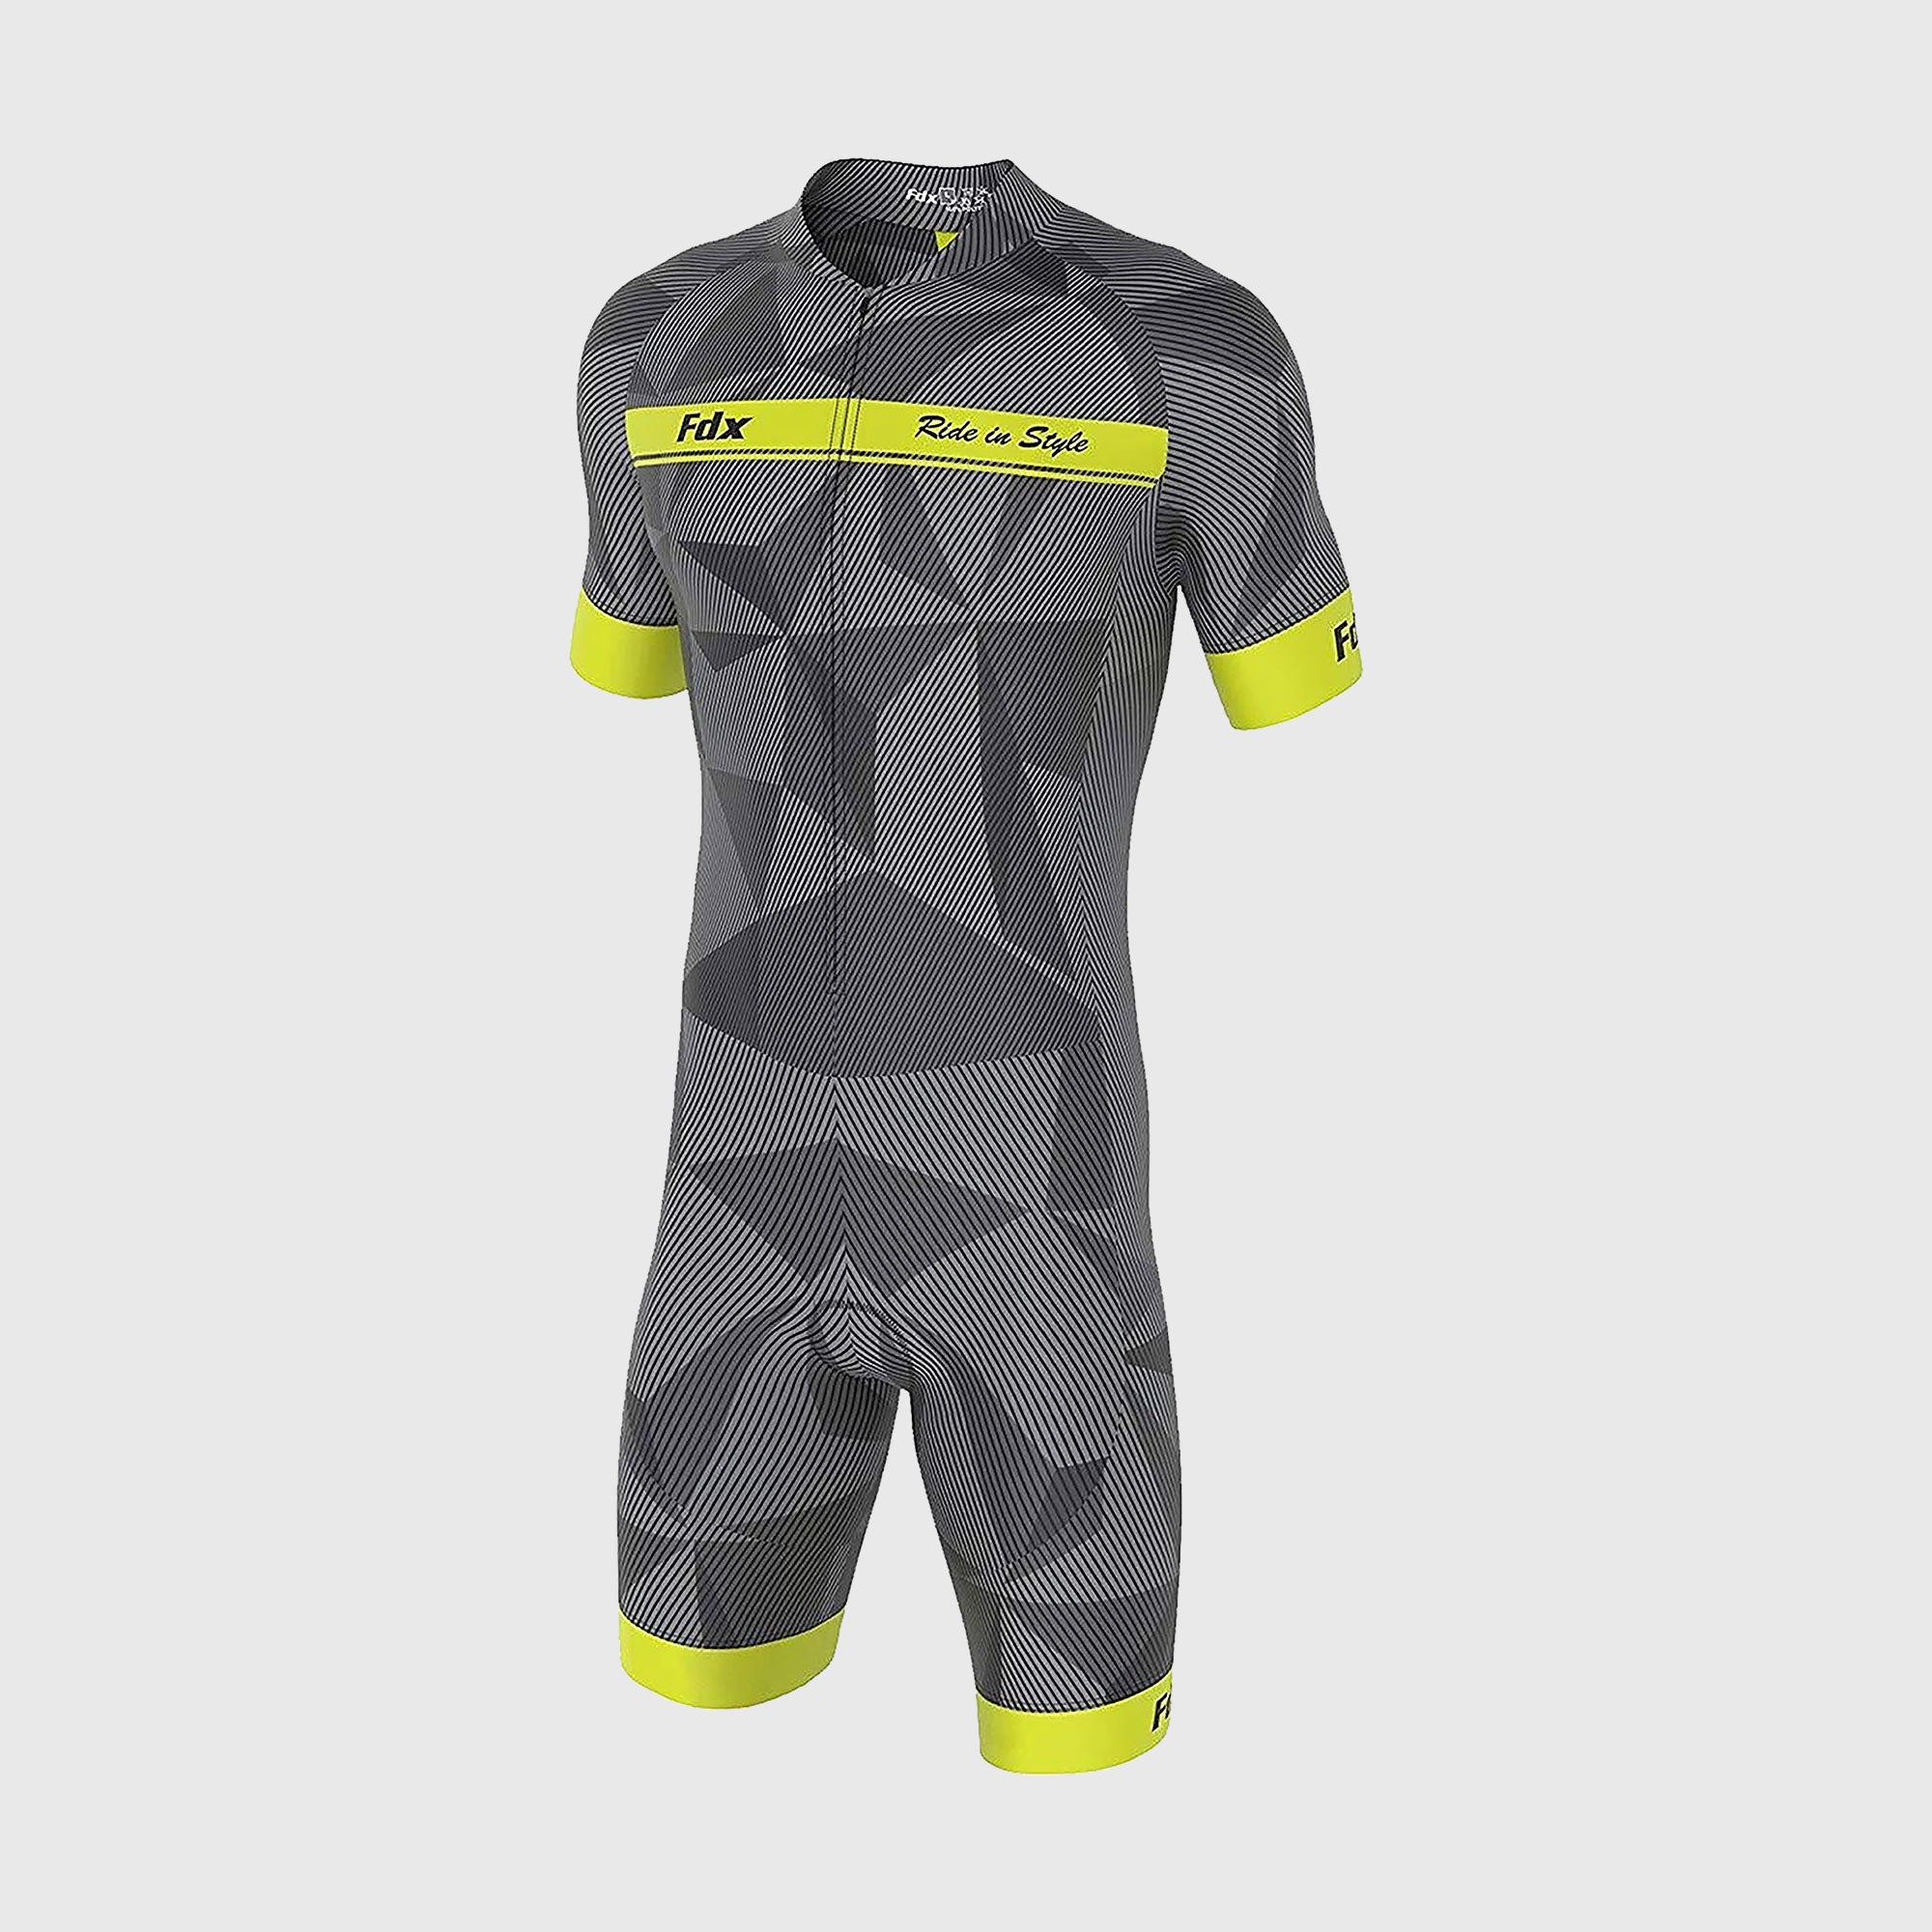 Fdx Splinter Yellow Men's Padded Triathlon / Skin Suit